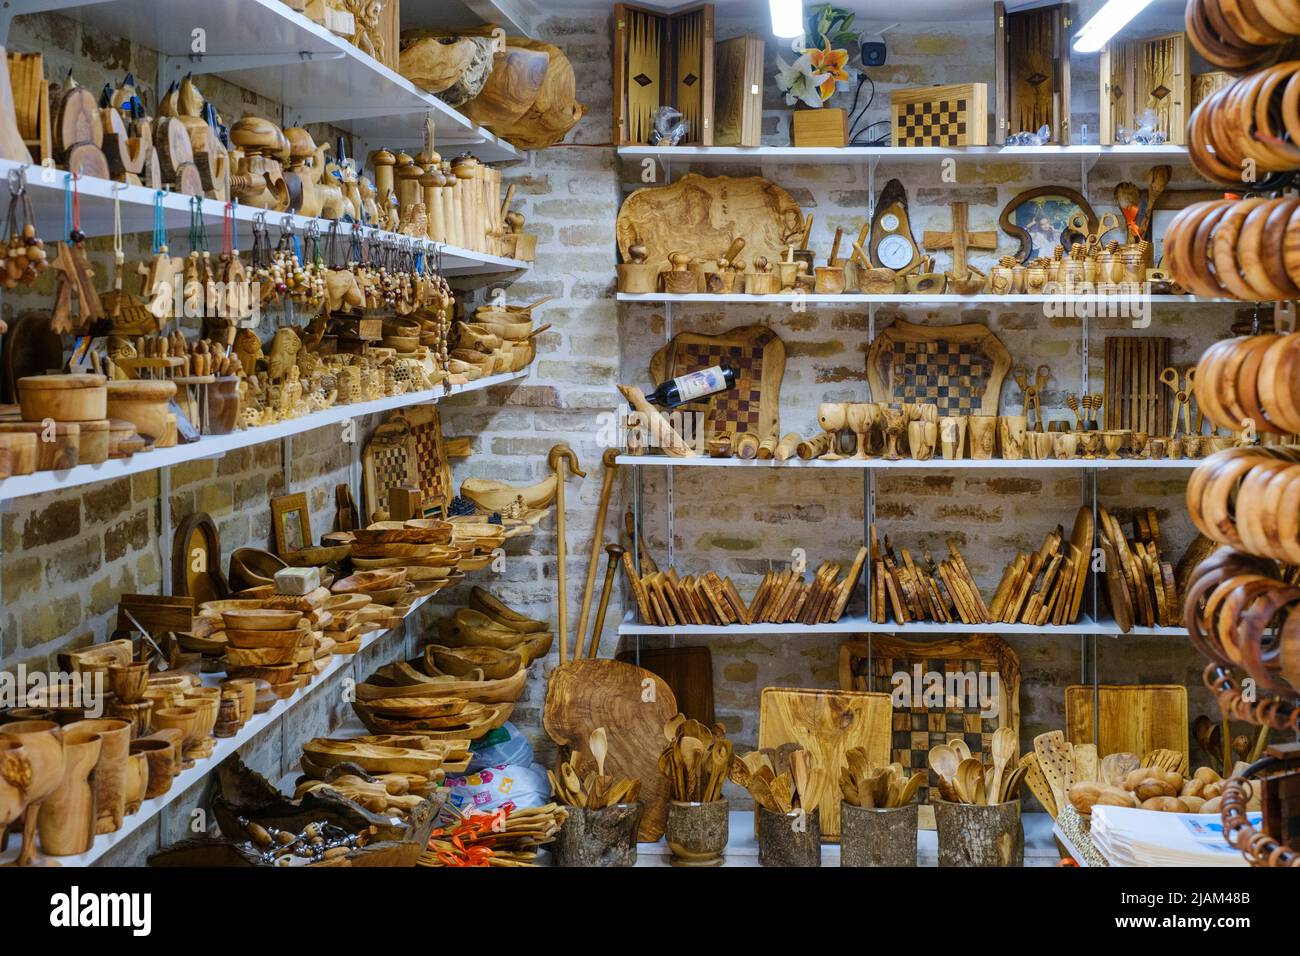 Olive wood market stall with tourist souvenirs, Corfu Town, Corfu or Kerkyra, Greece Stock Photo